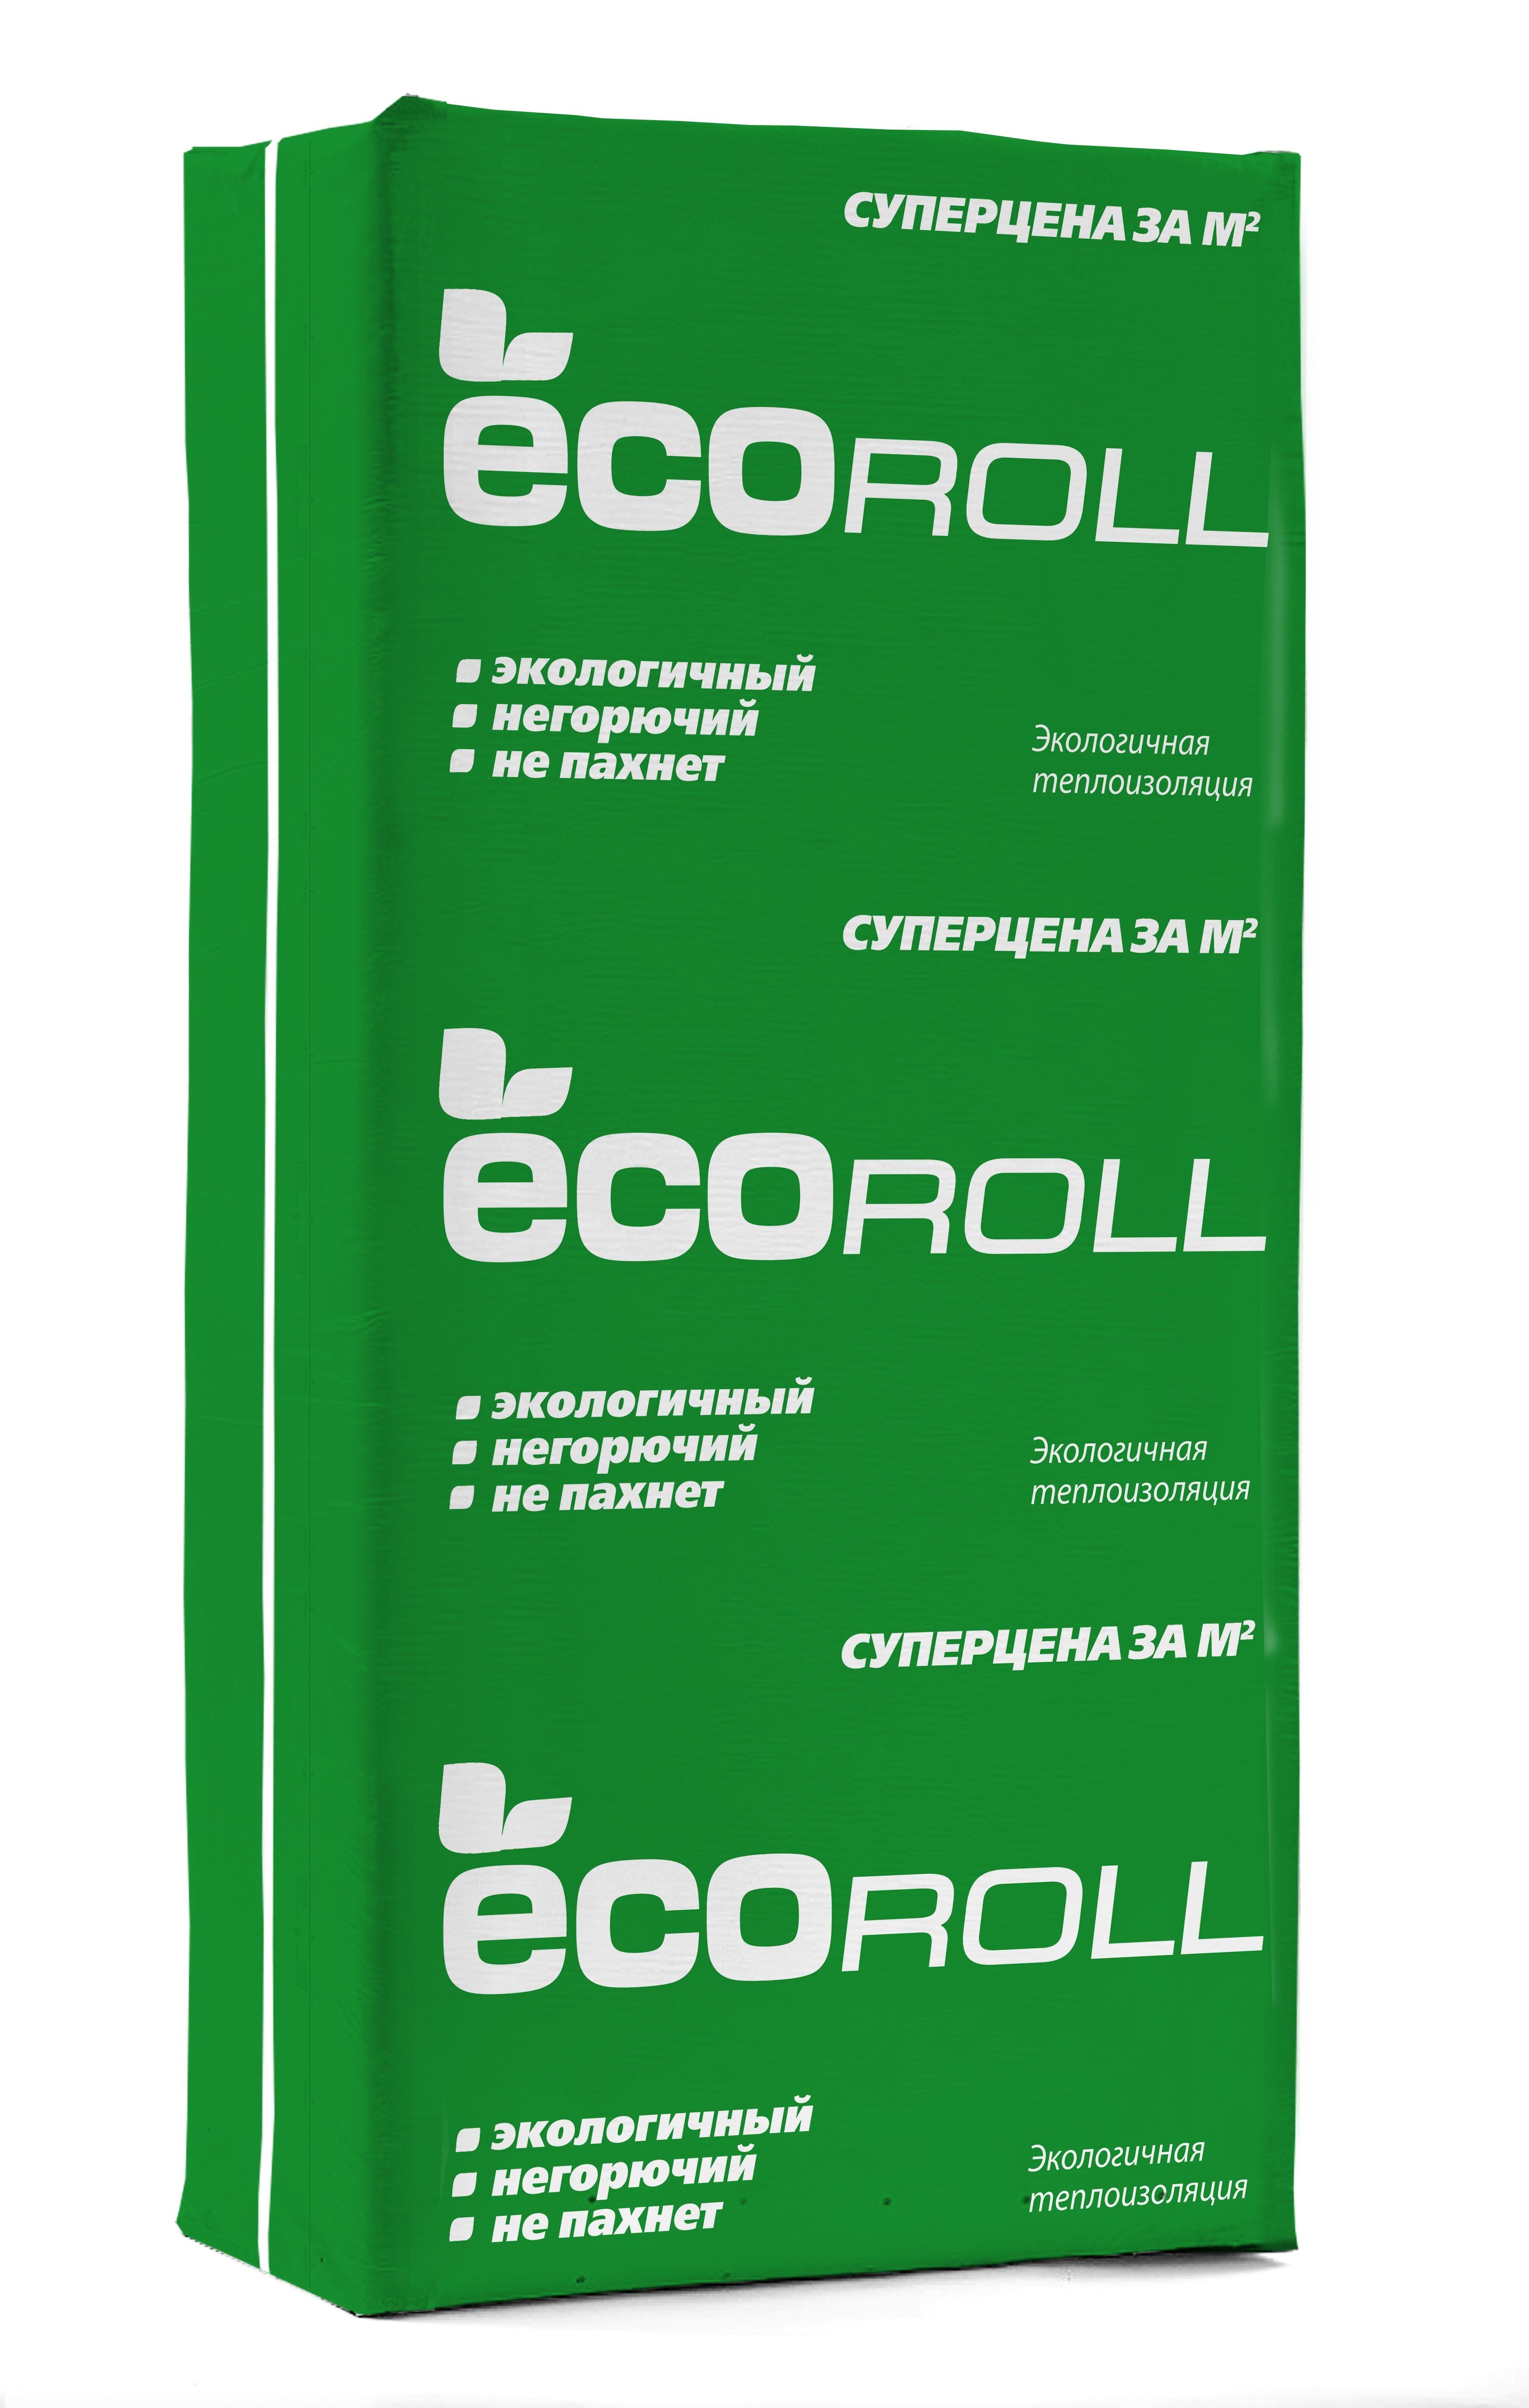 EcorollPlita